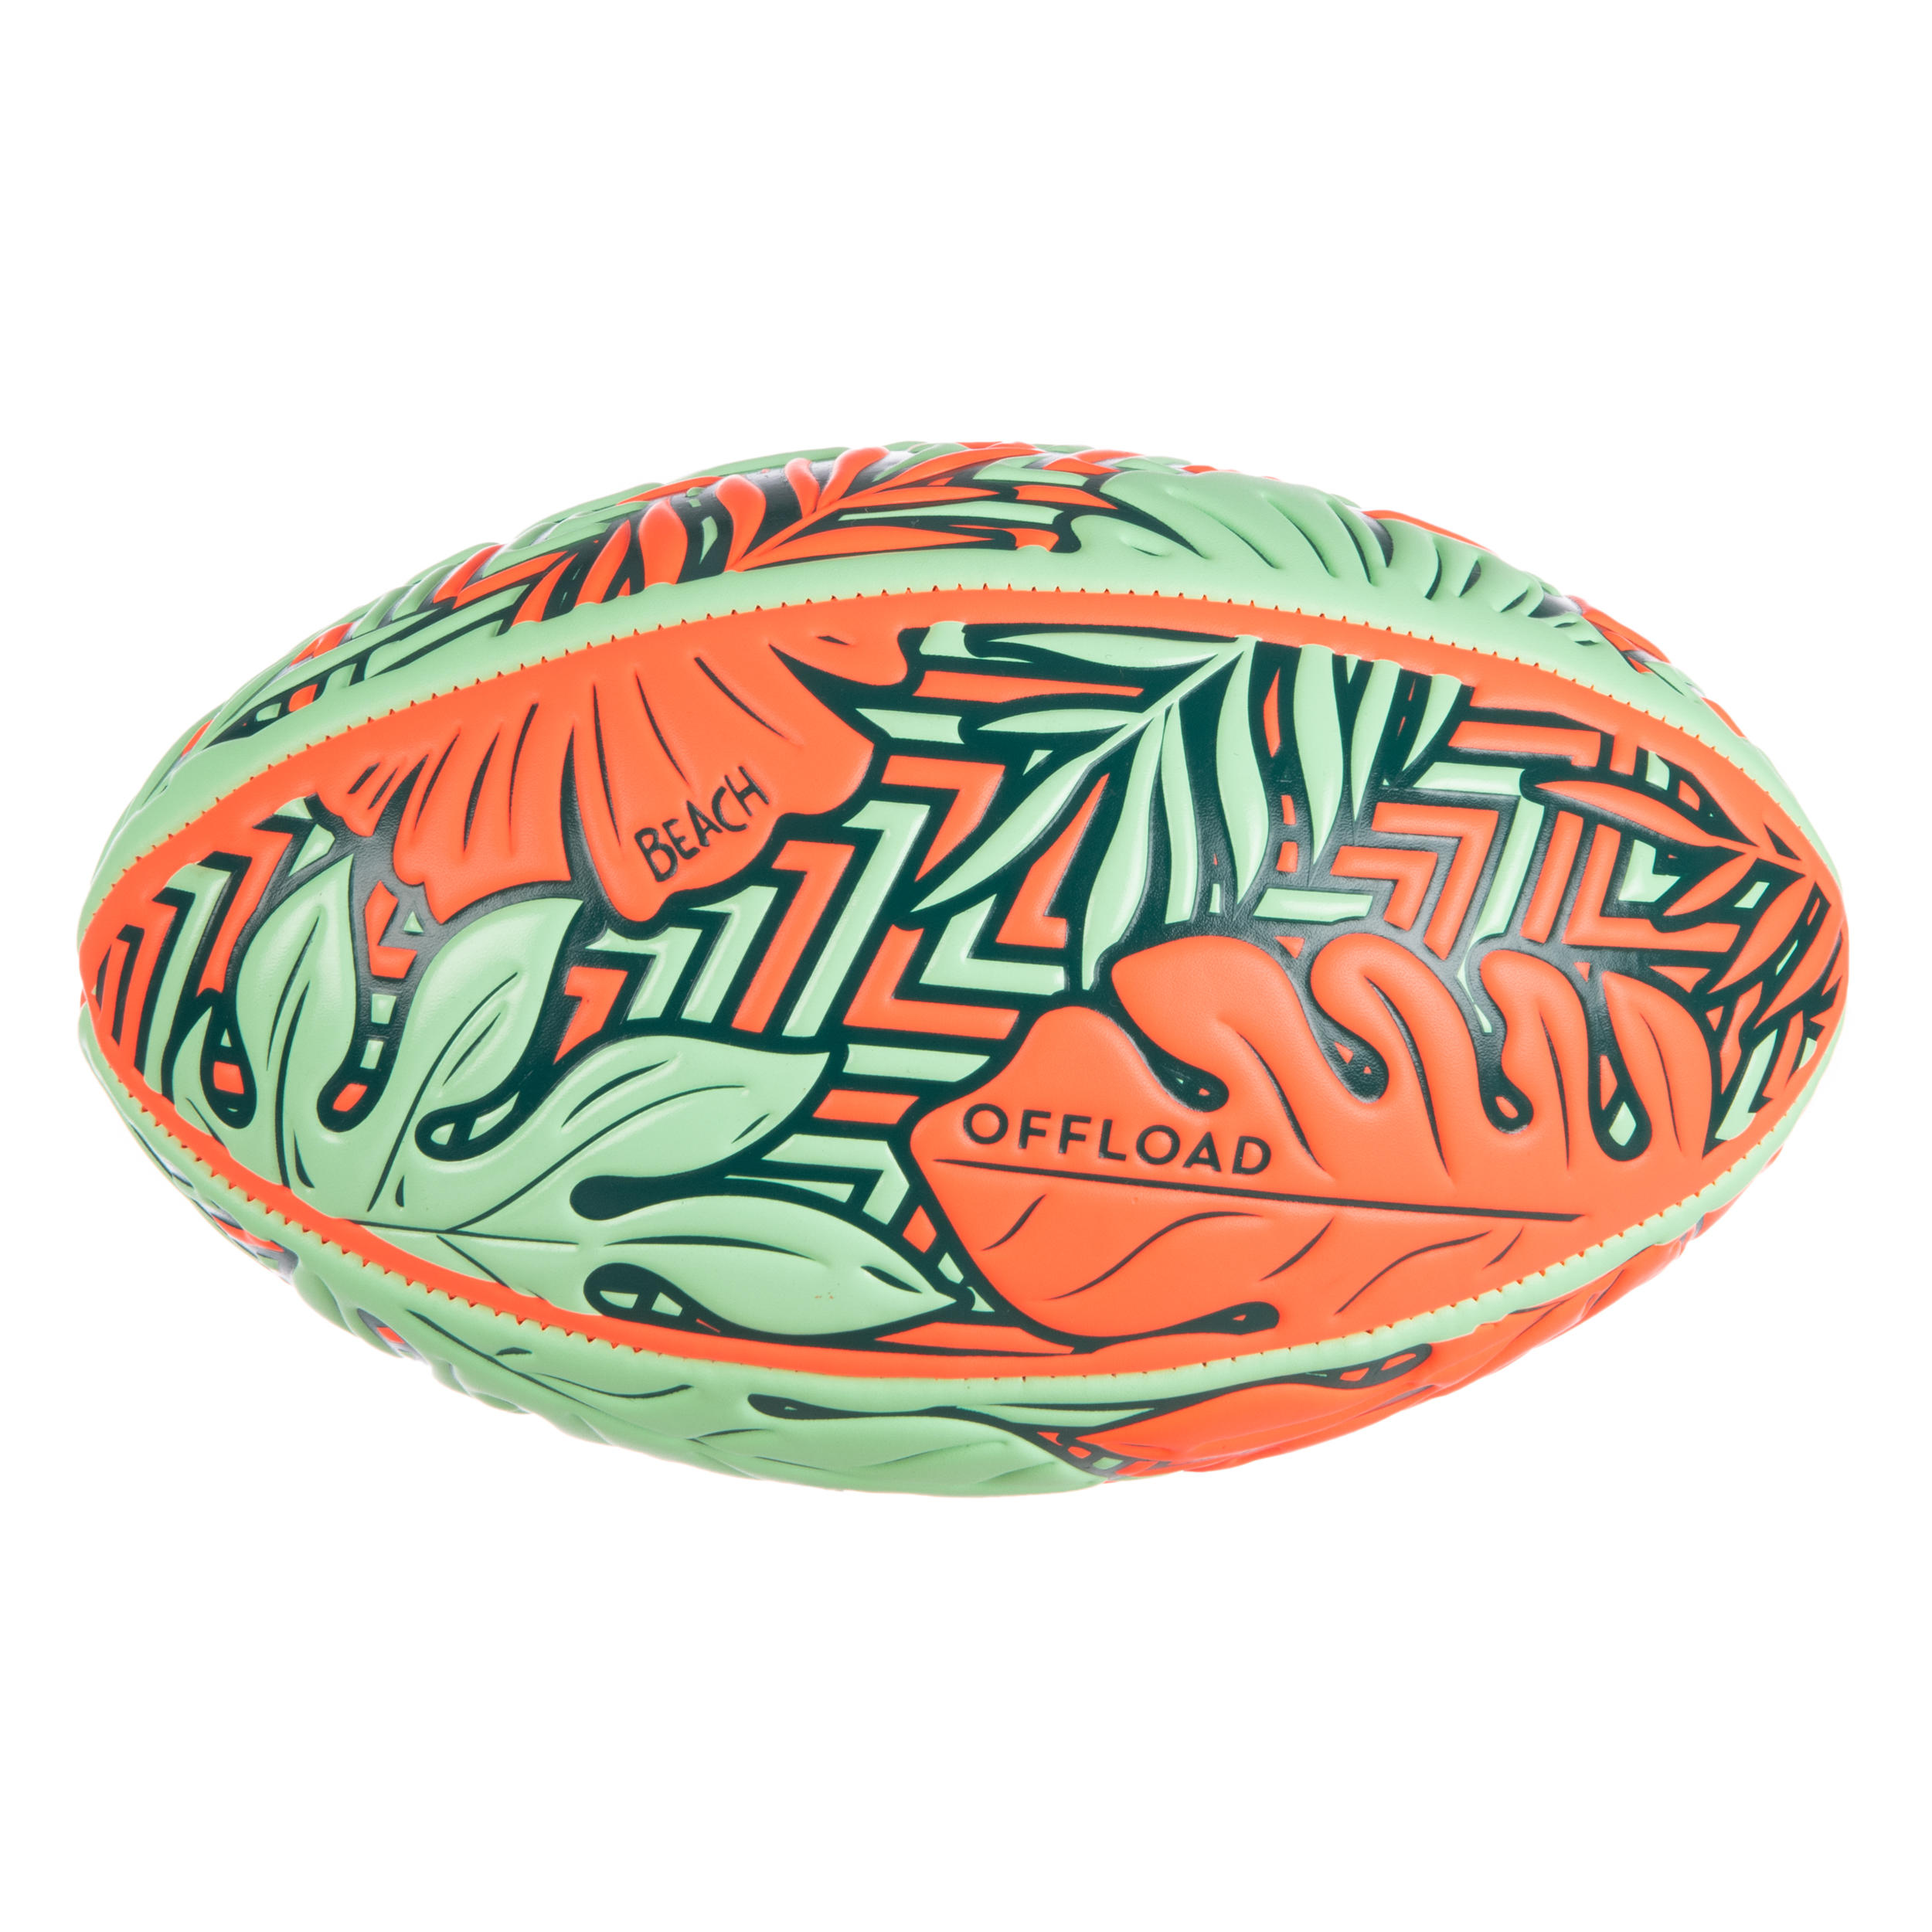 OFFLOAD Beach Rugby Ball R100 Midi Tropical Size 1 - Orange/Green